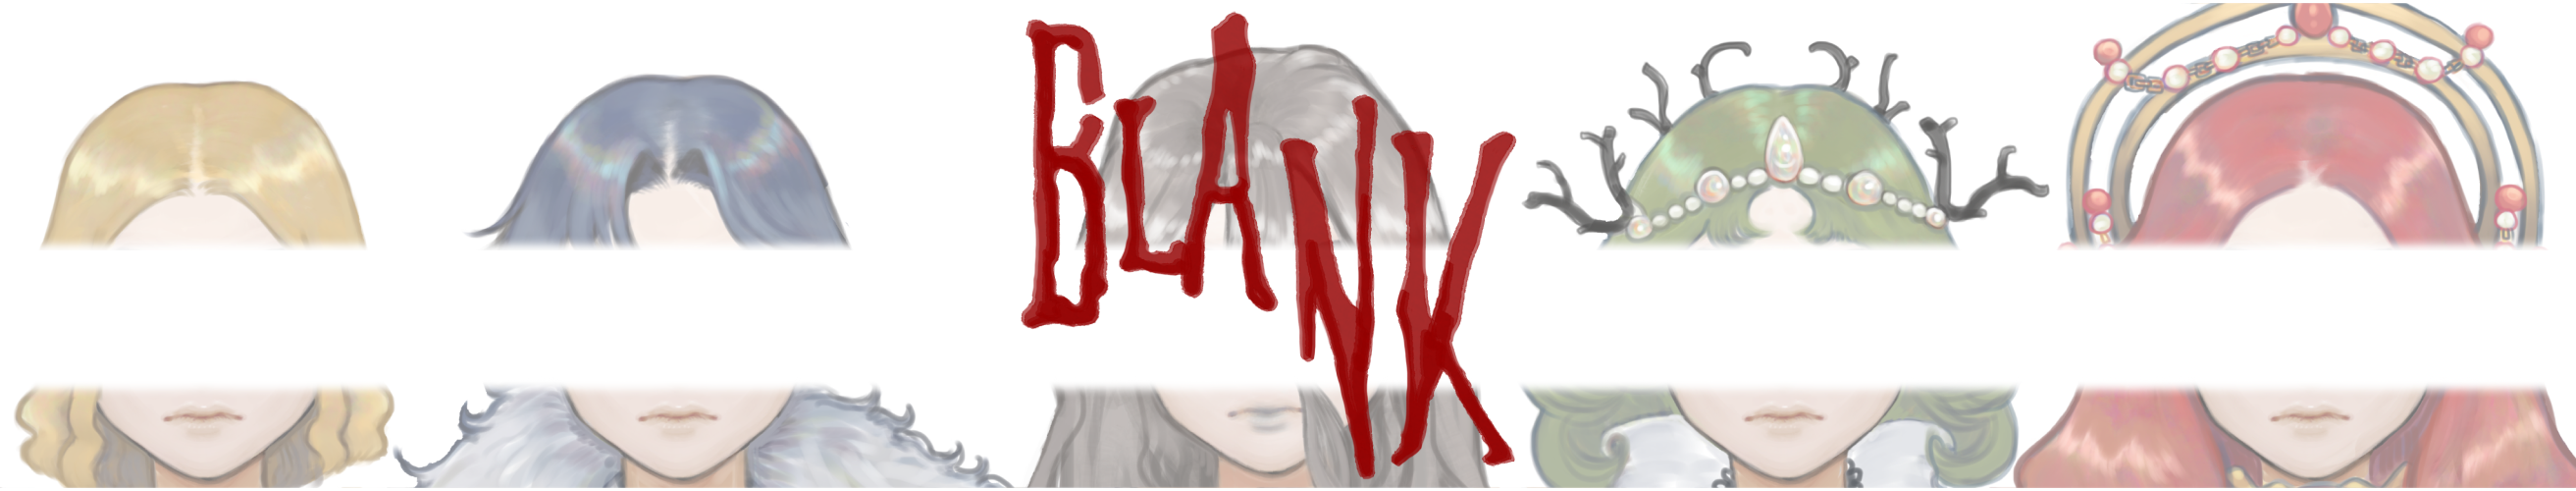 BLANK